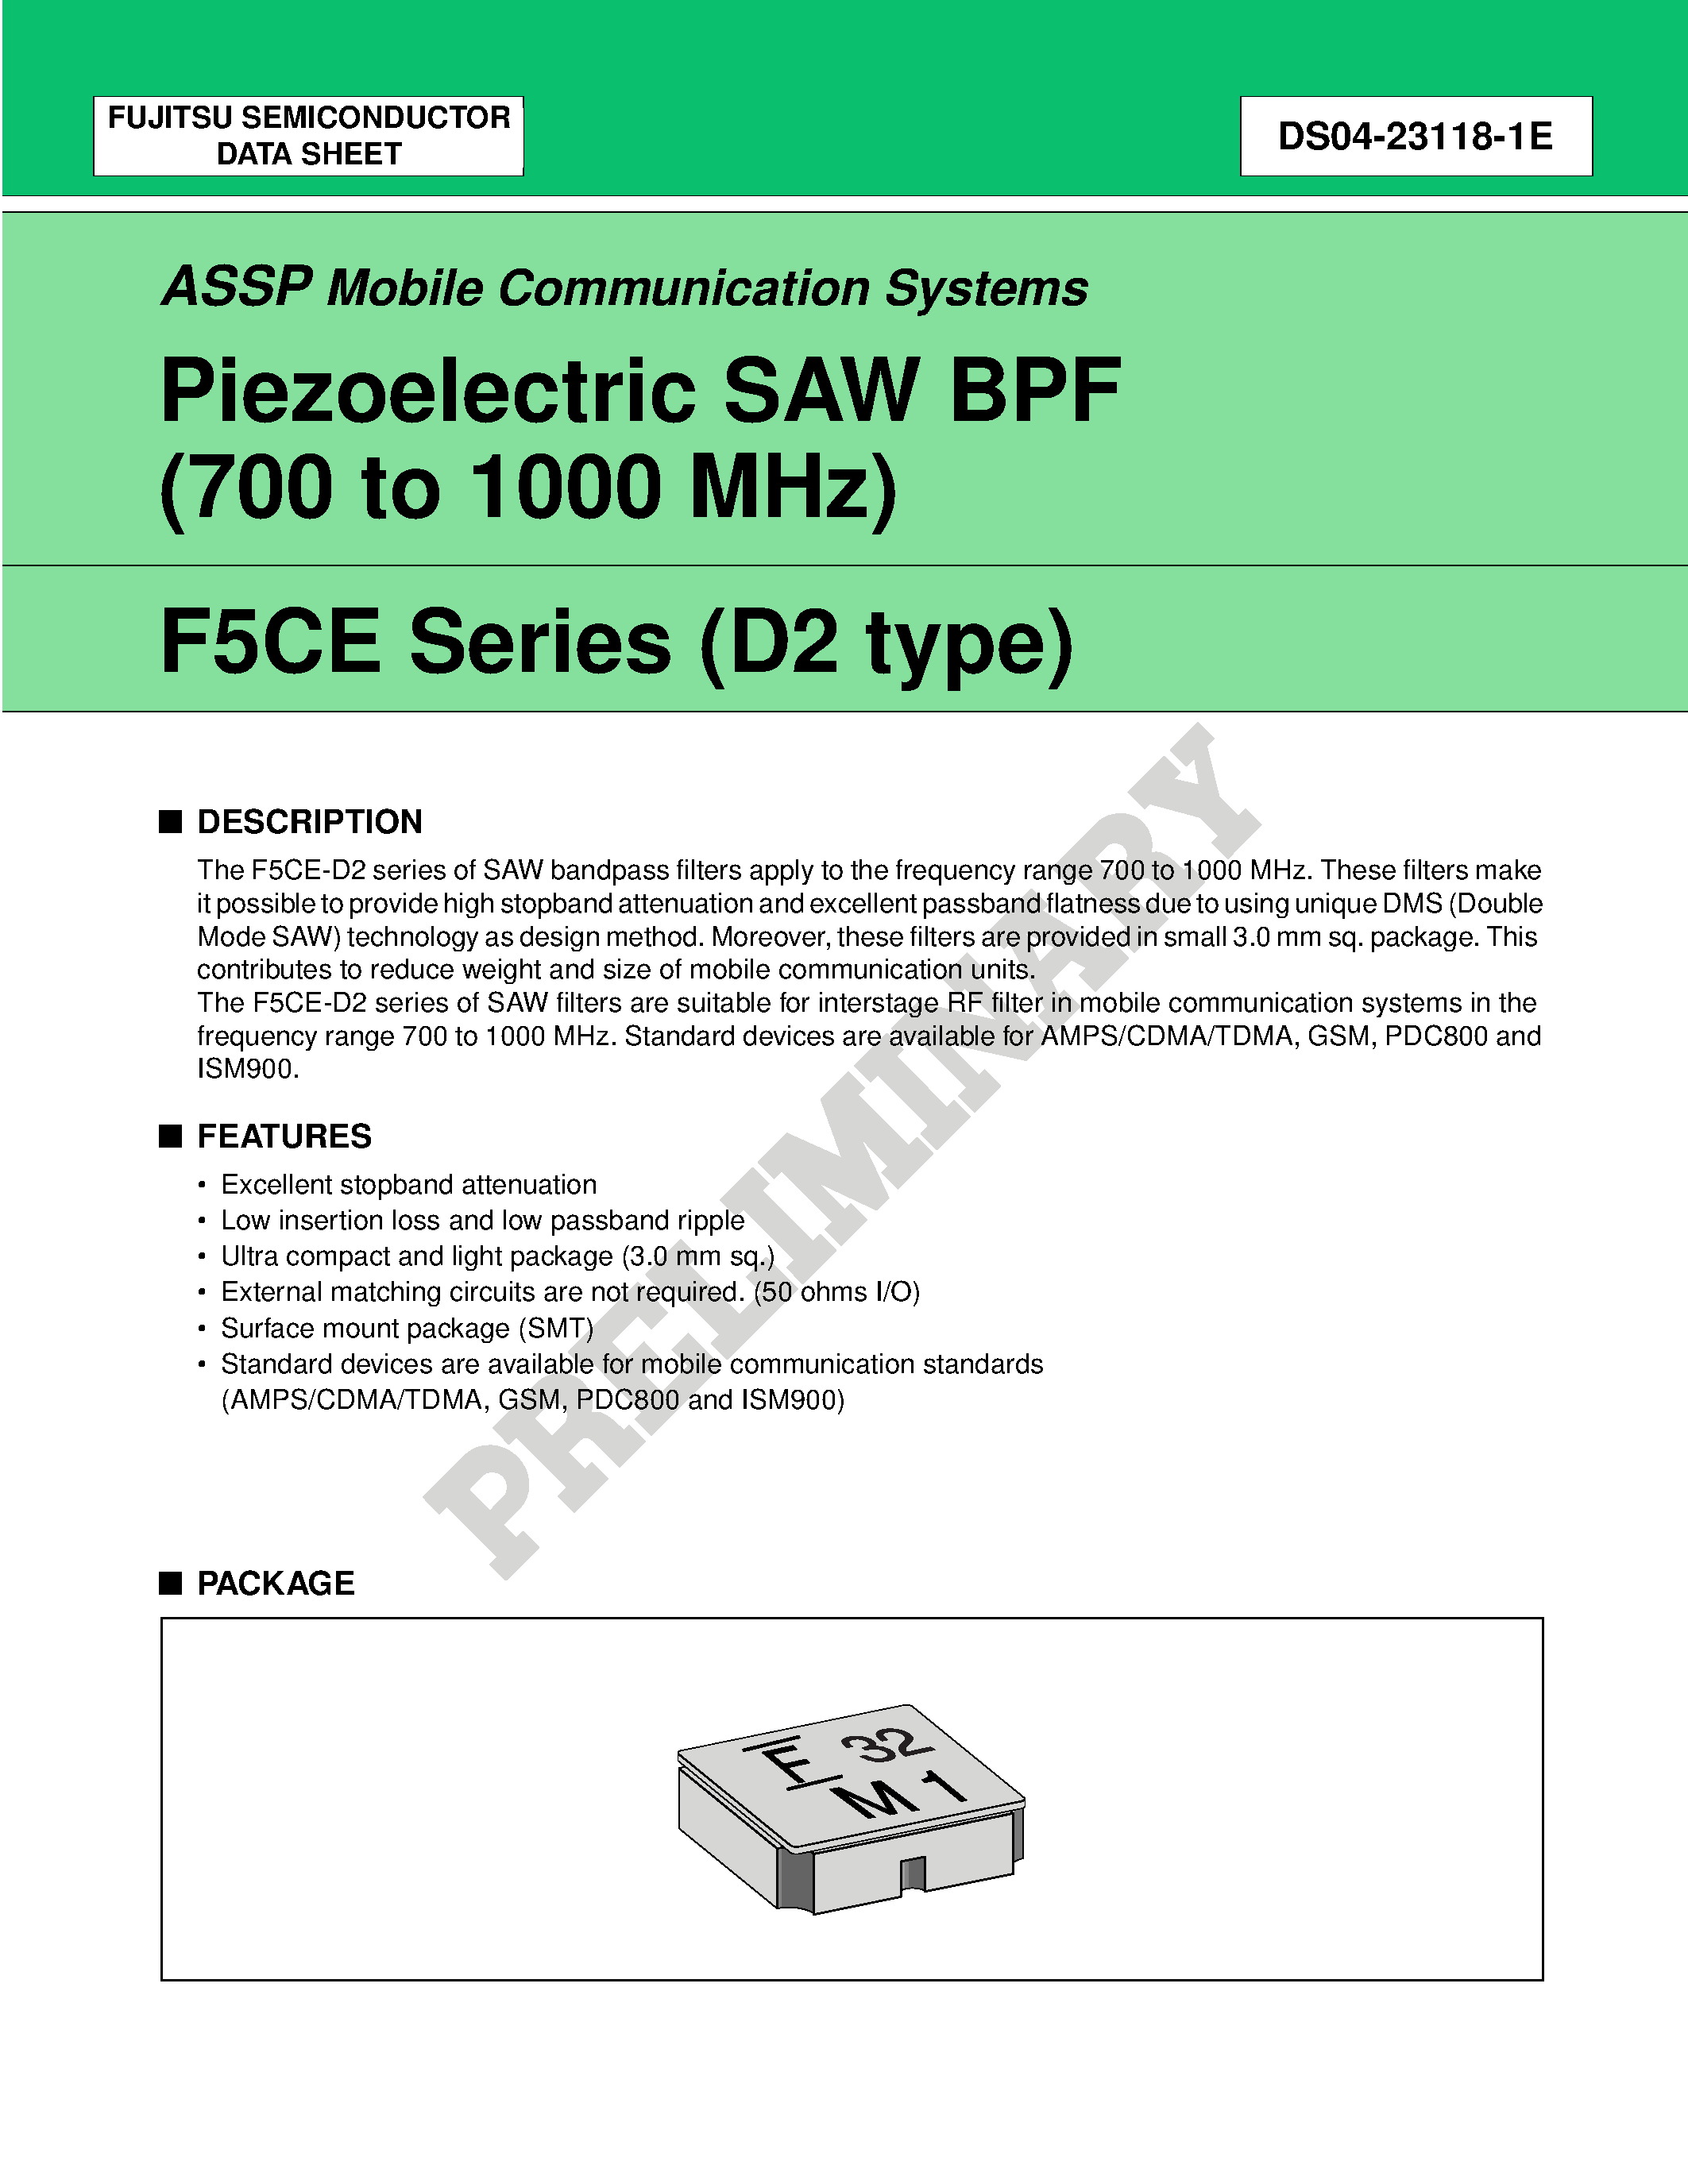 Даташит FAR-F5CE-947M50-K228-U - Piezoelectric SAW BPF (700 to 1700 MHz) страница 1